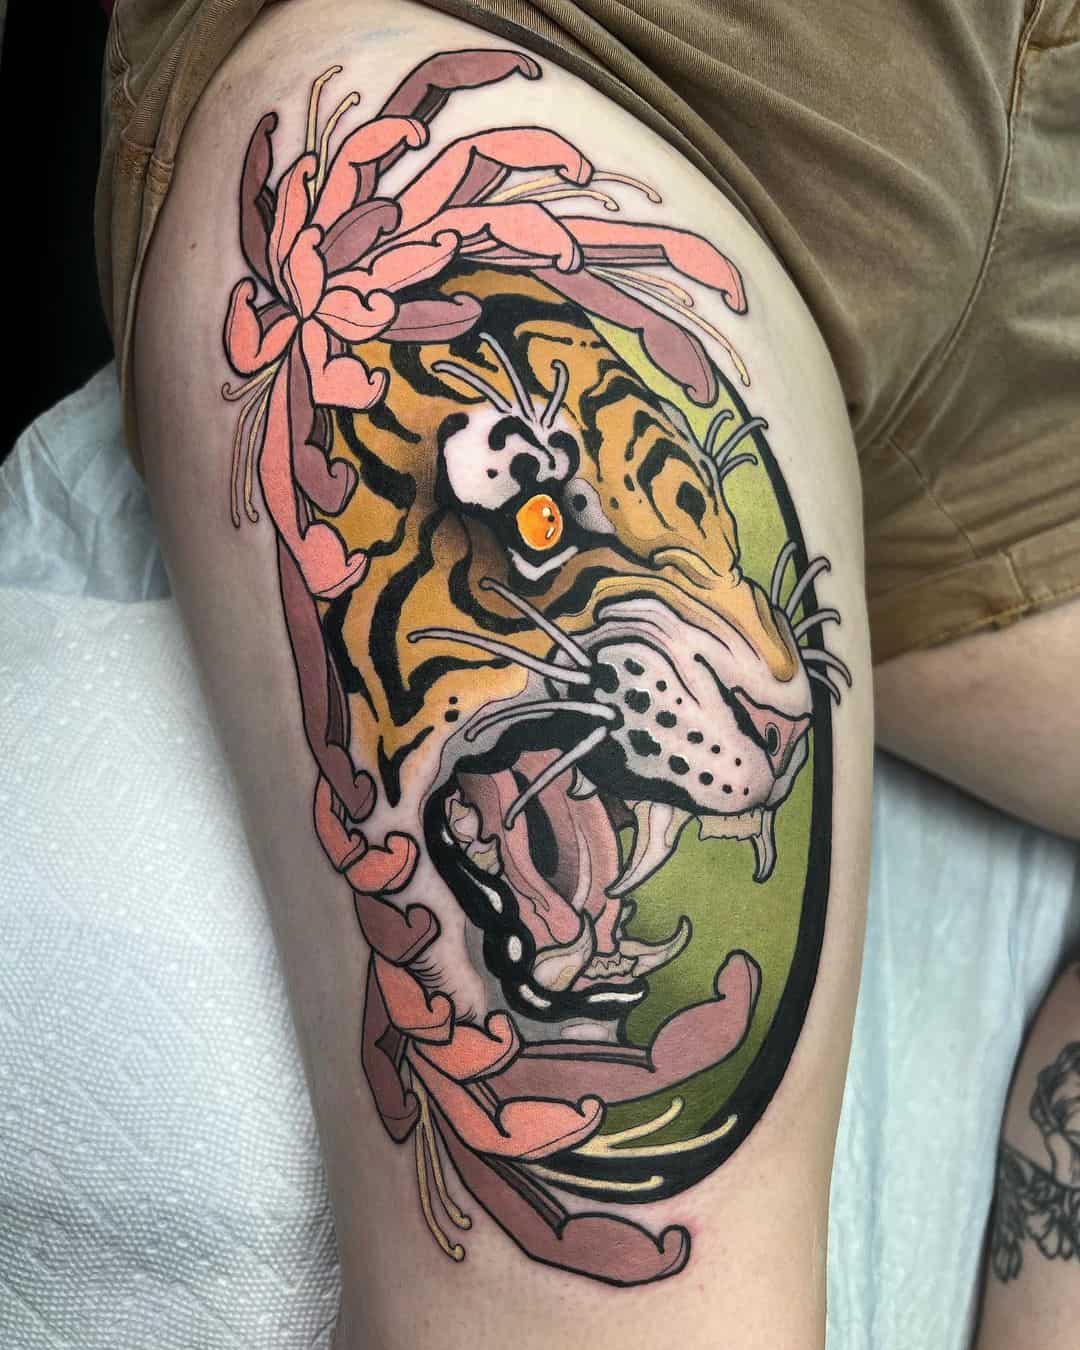 Colorful tiger tattoo by benoztattoos